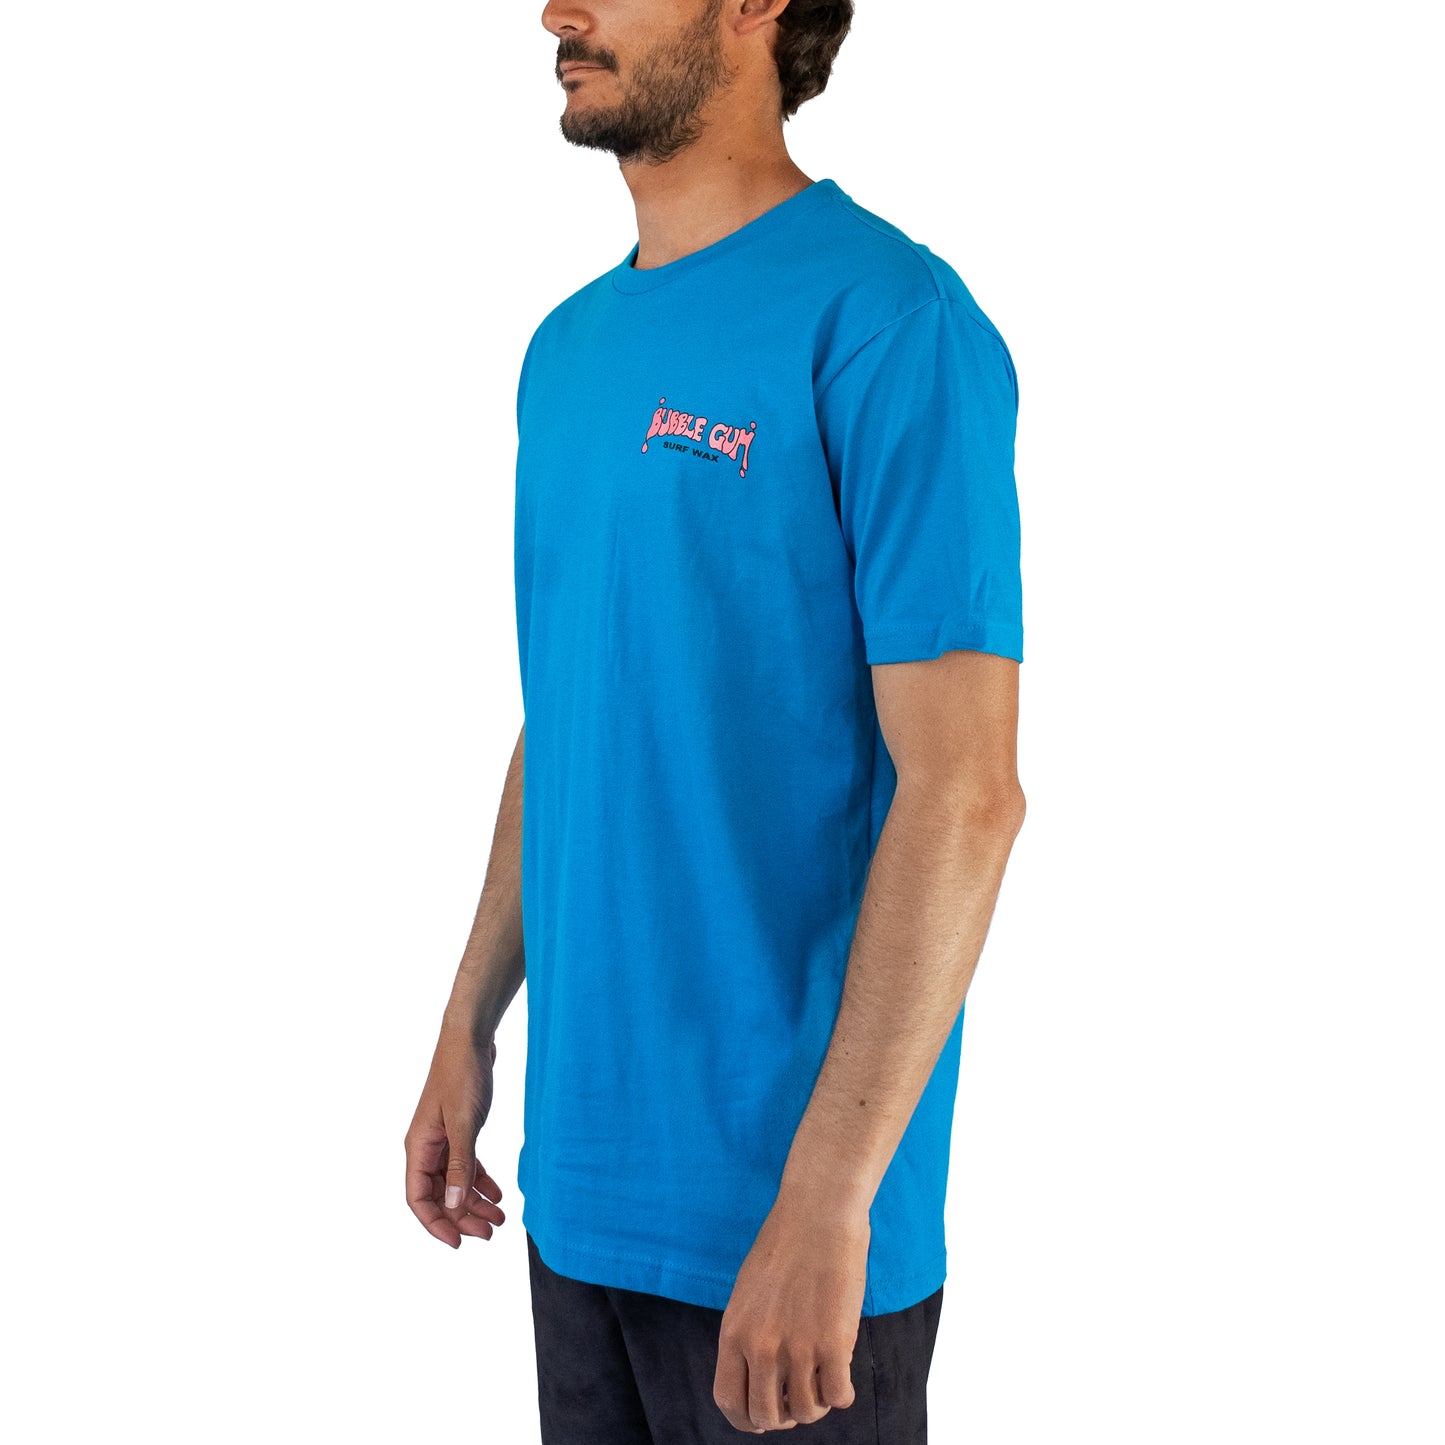 Animal T-Shirt Blue